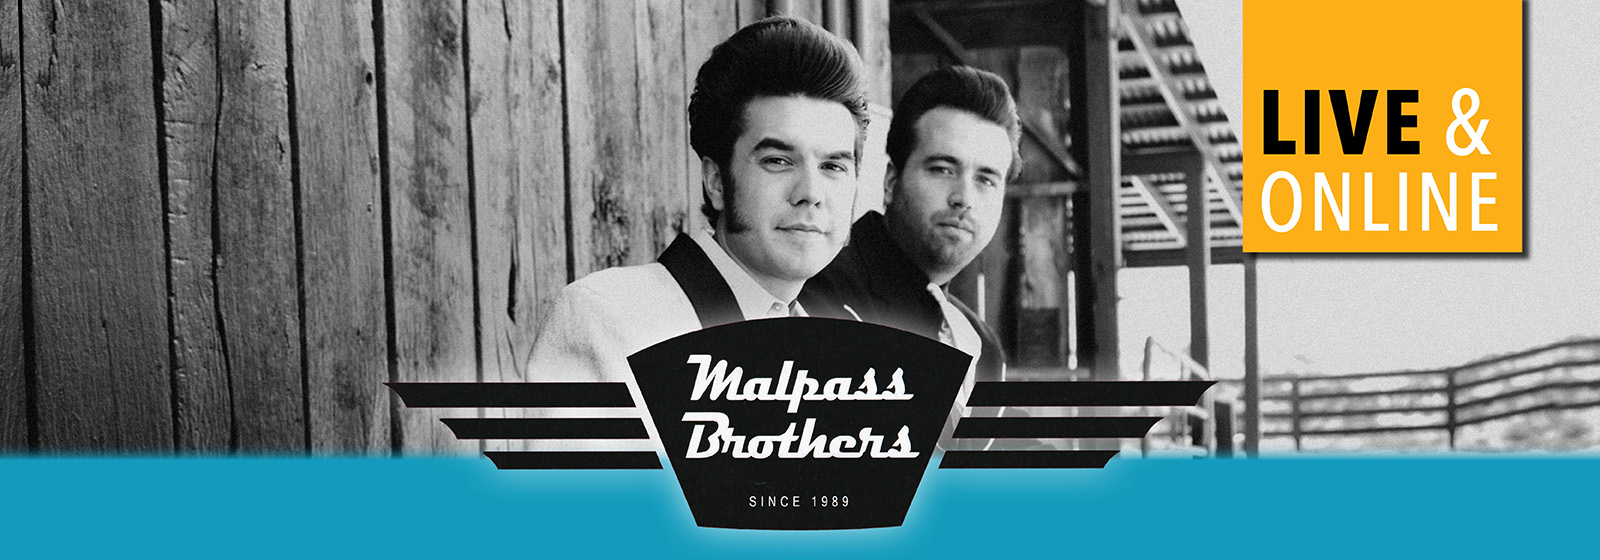 The Malpass Brothers